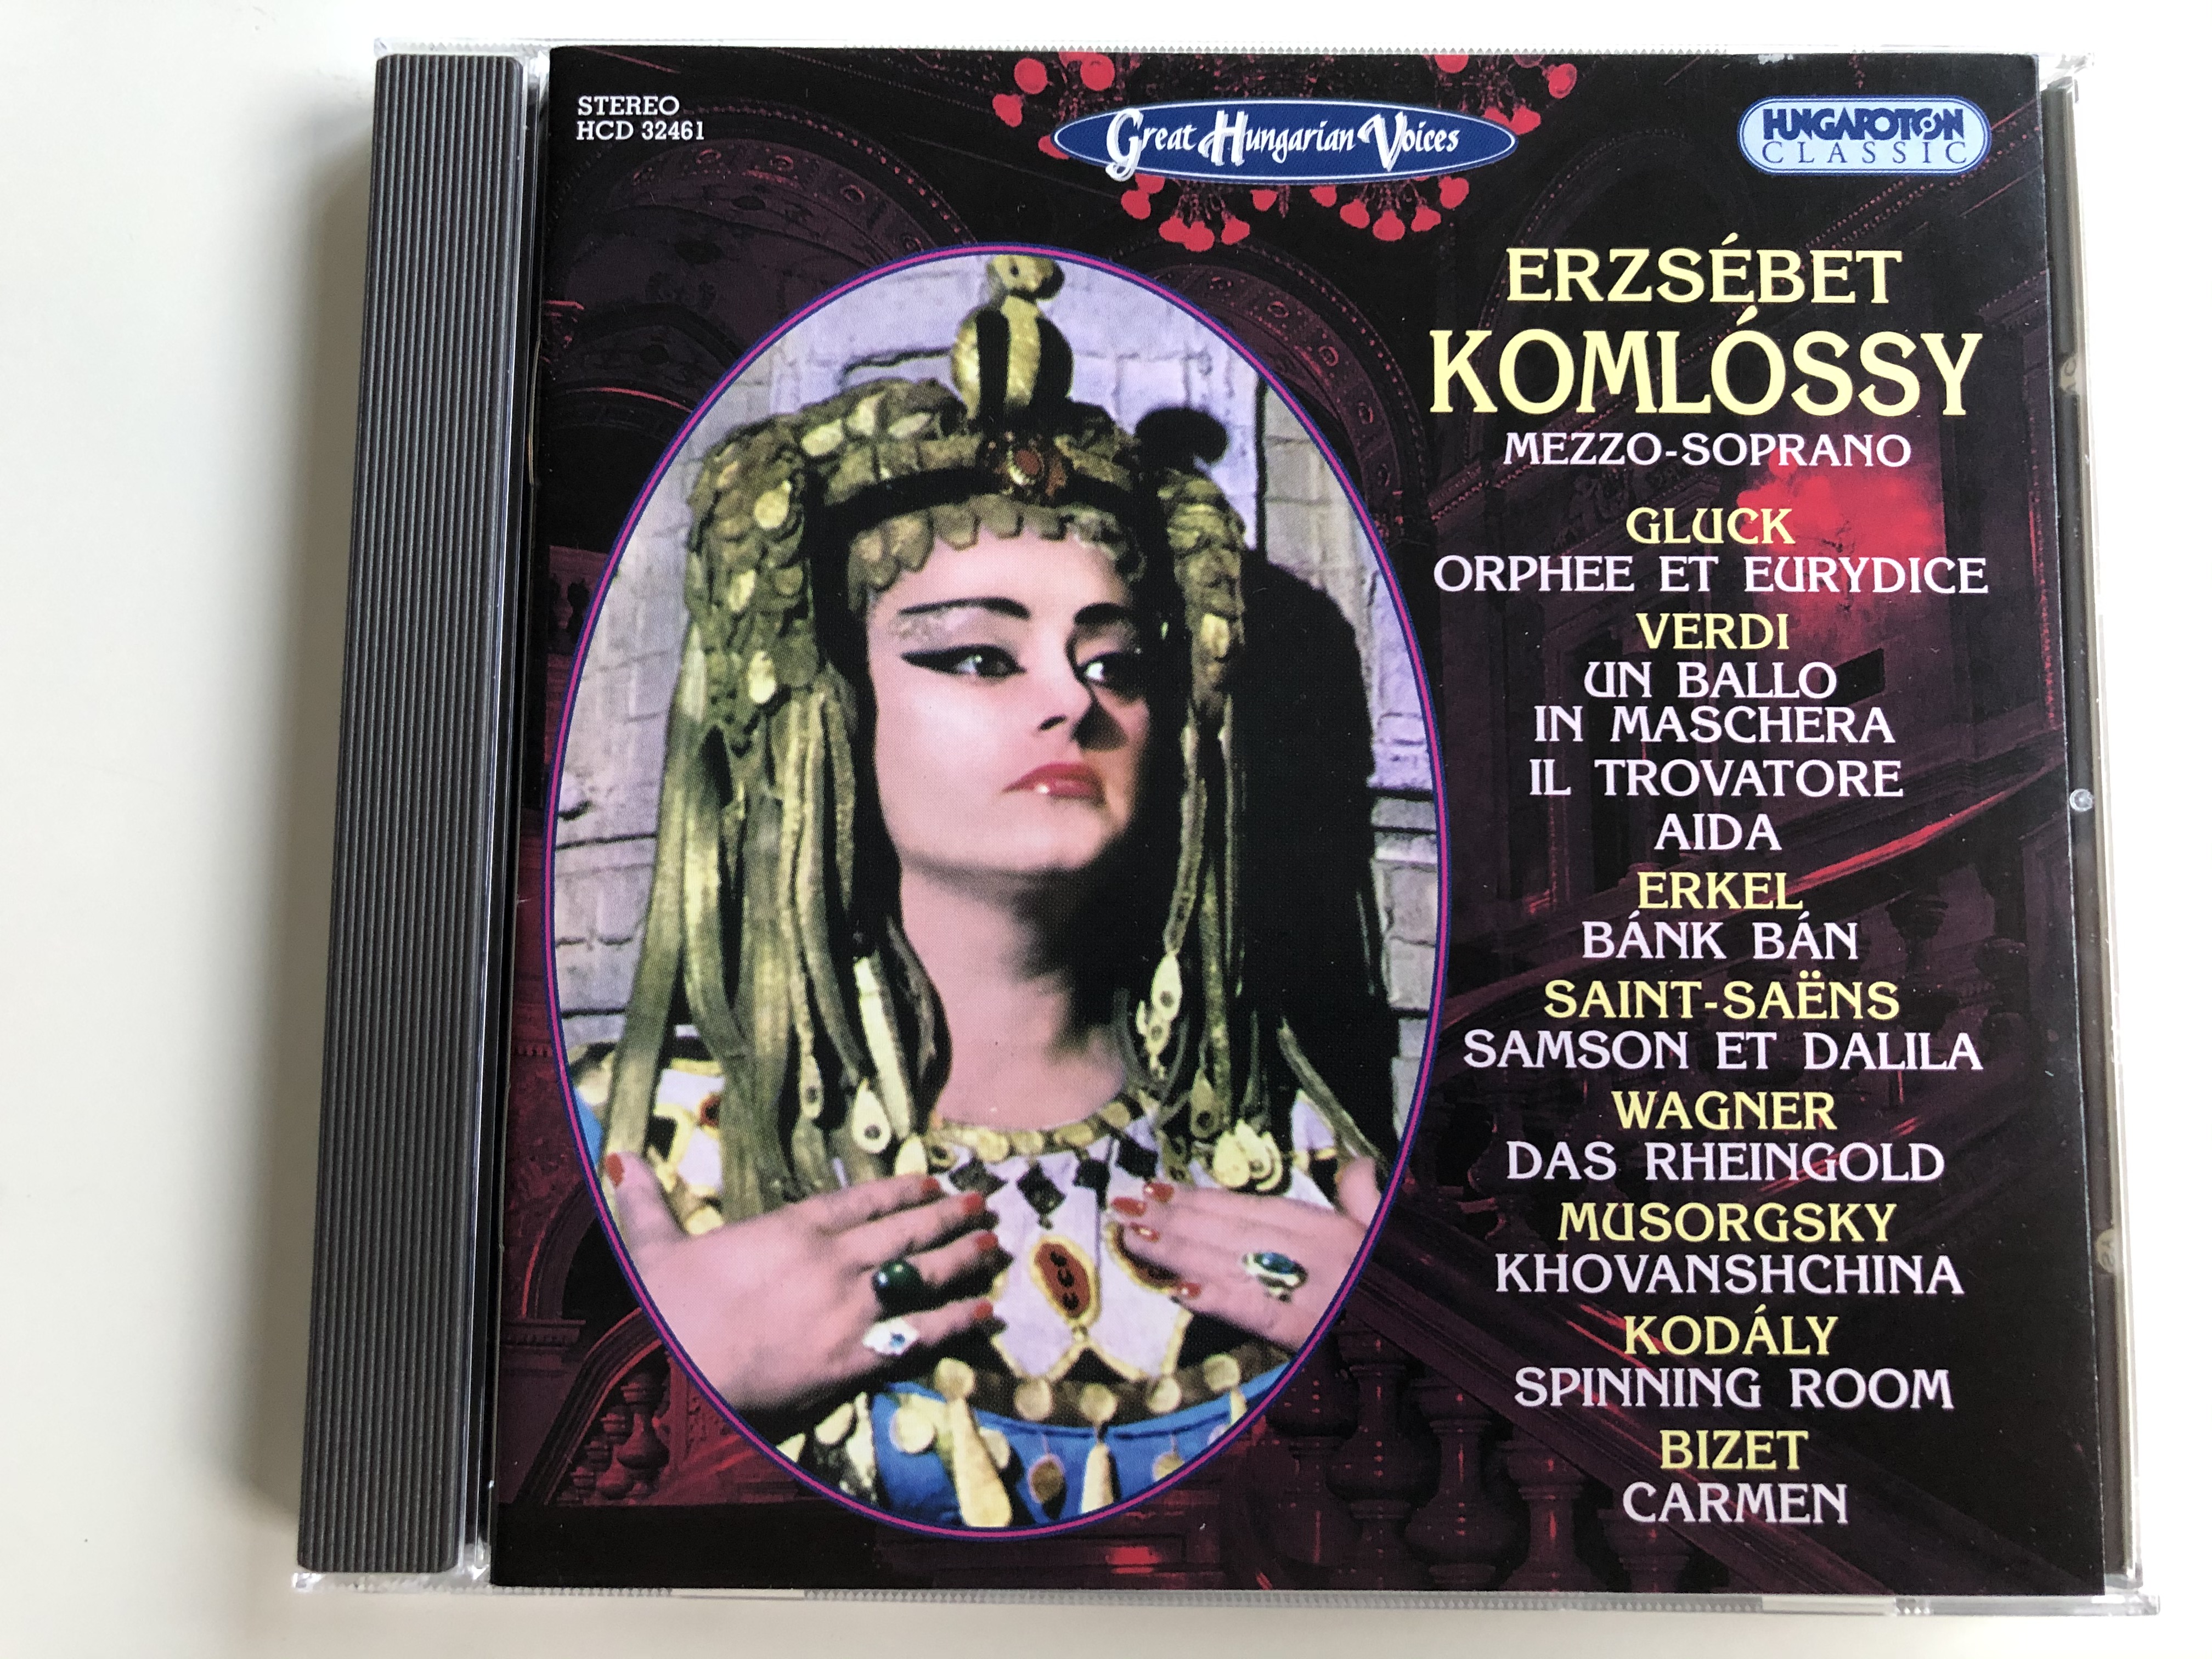 erzsebet-komlossy-mezzo-soprano-gluck-verdi-erkel-saint-saens-wagner-musorgsky-kodaly-bizet-hungaroton-classic-audio-cd-2007-stereo-hcd-32461-1-.jpg